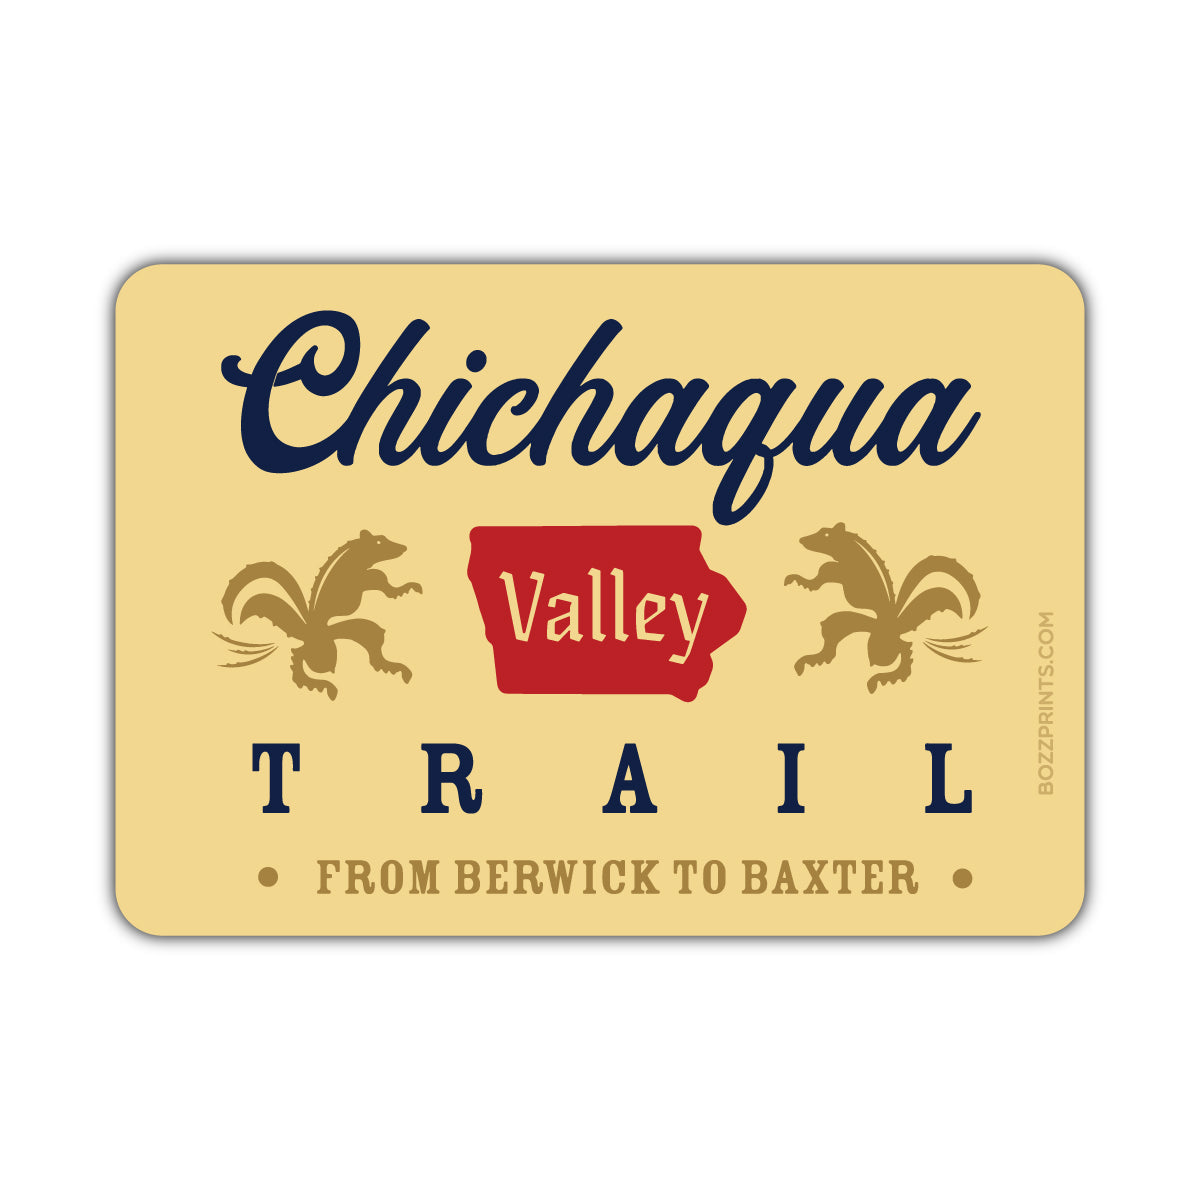 Chichaqua Valley Trail - Bozz Prints